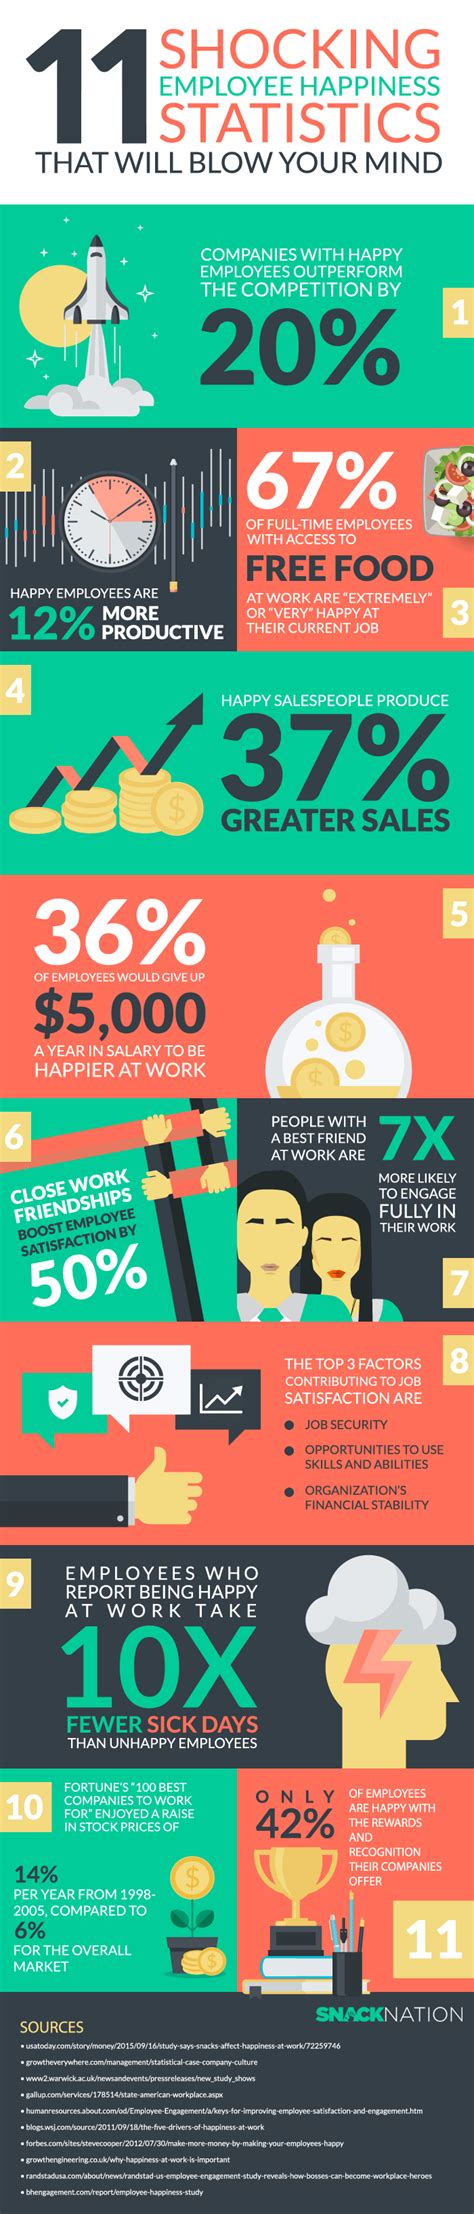 Employee Appreciation Infographic